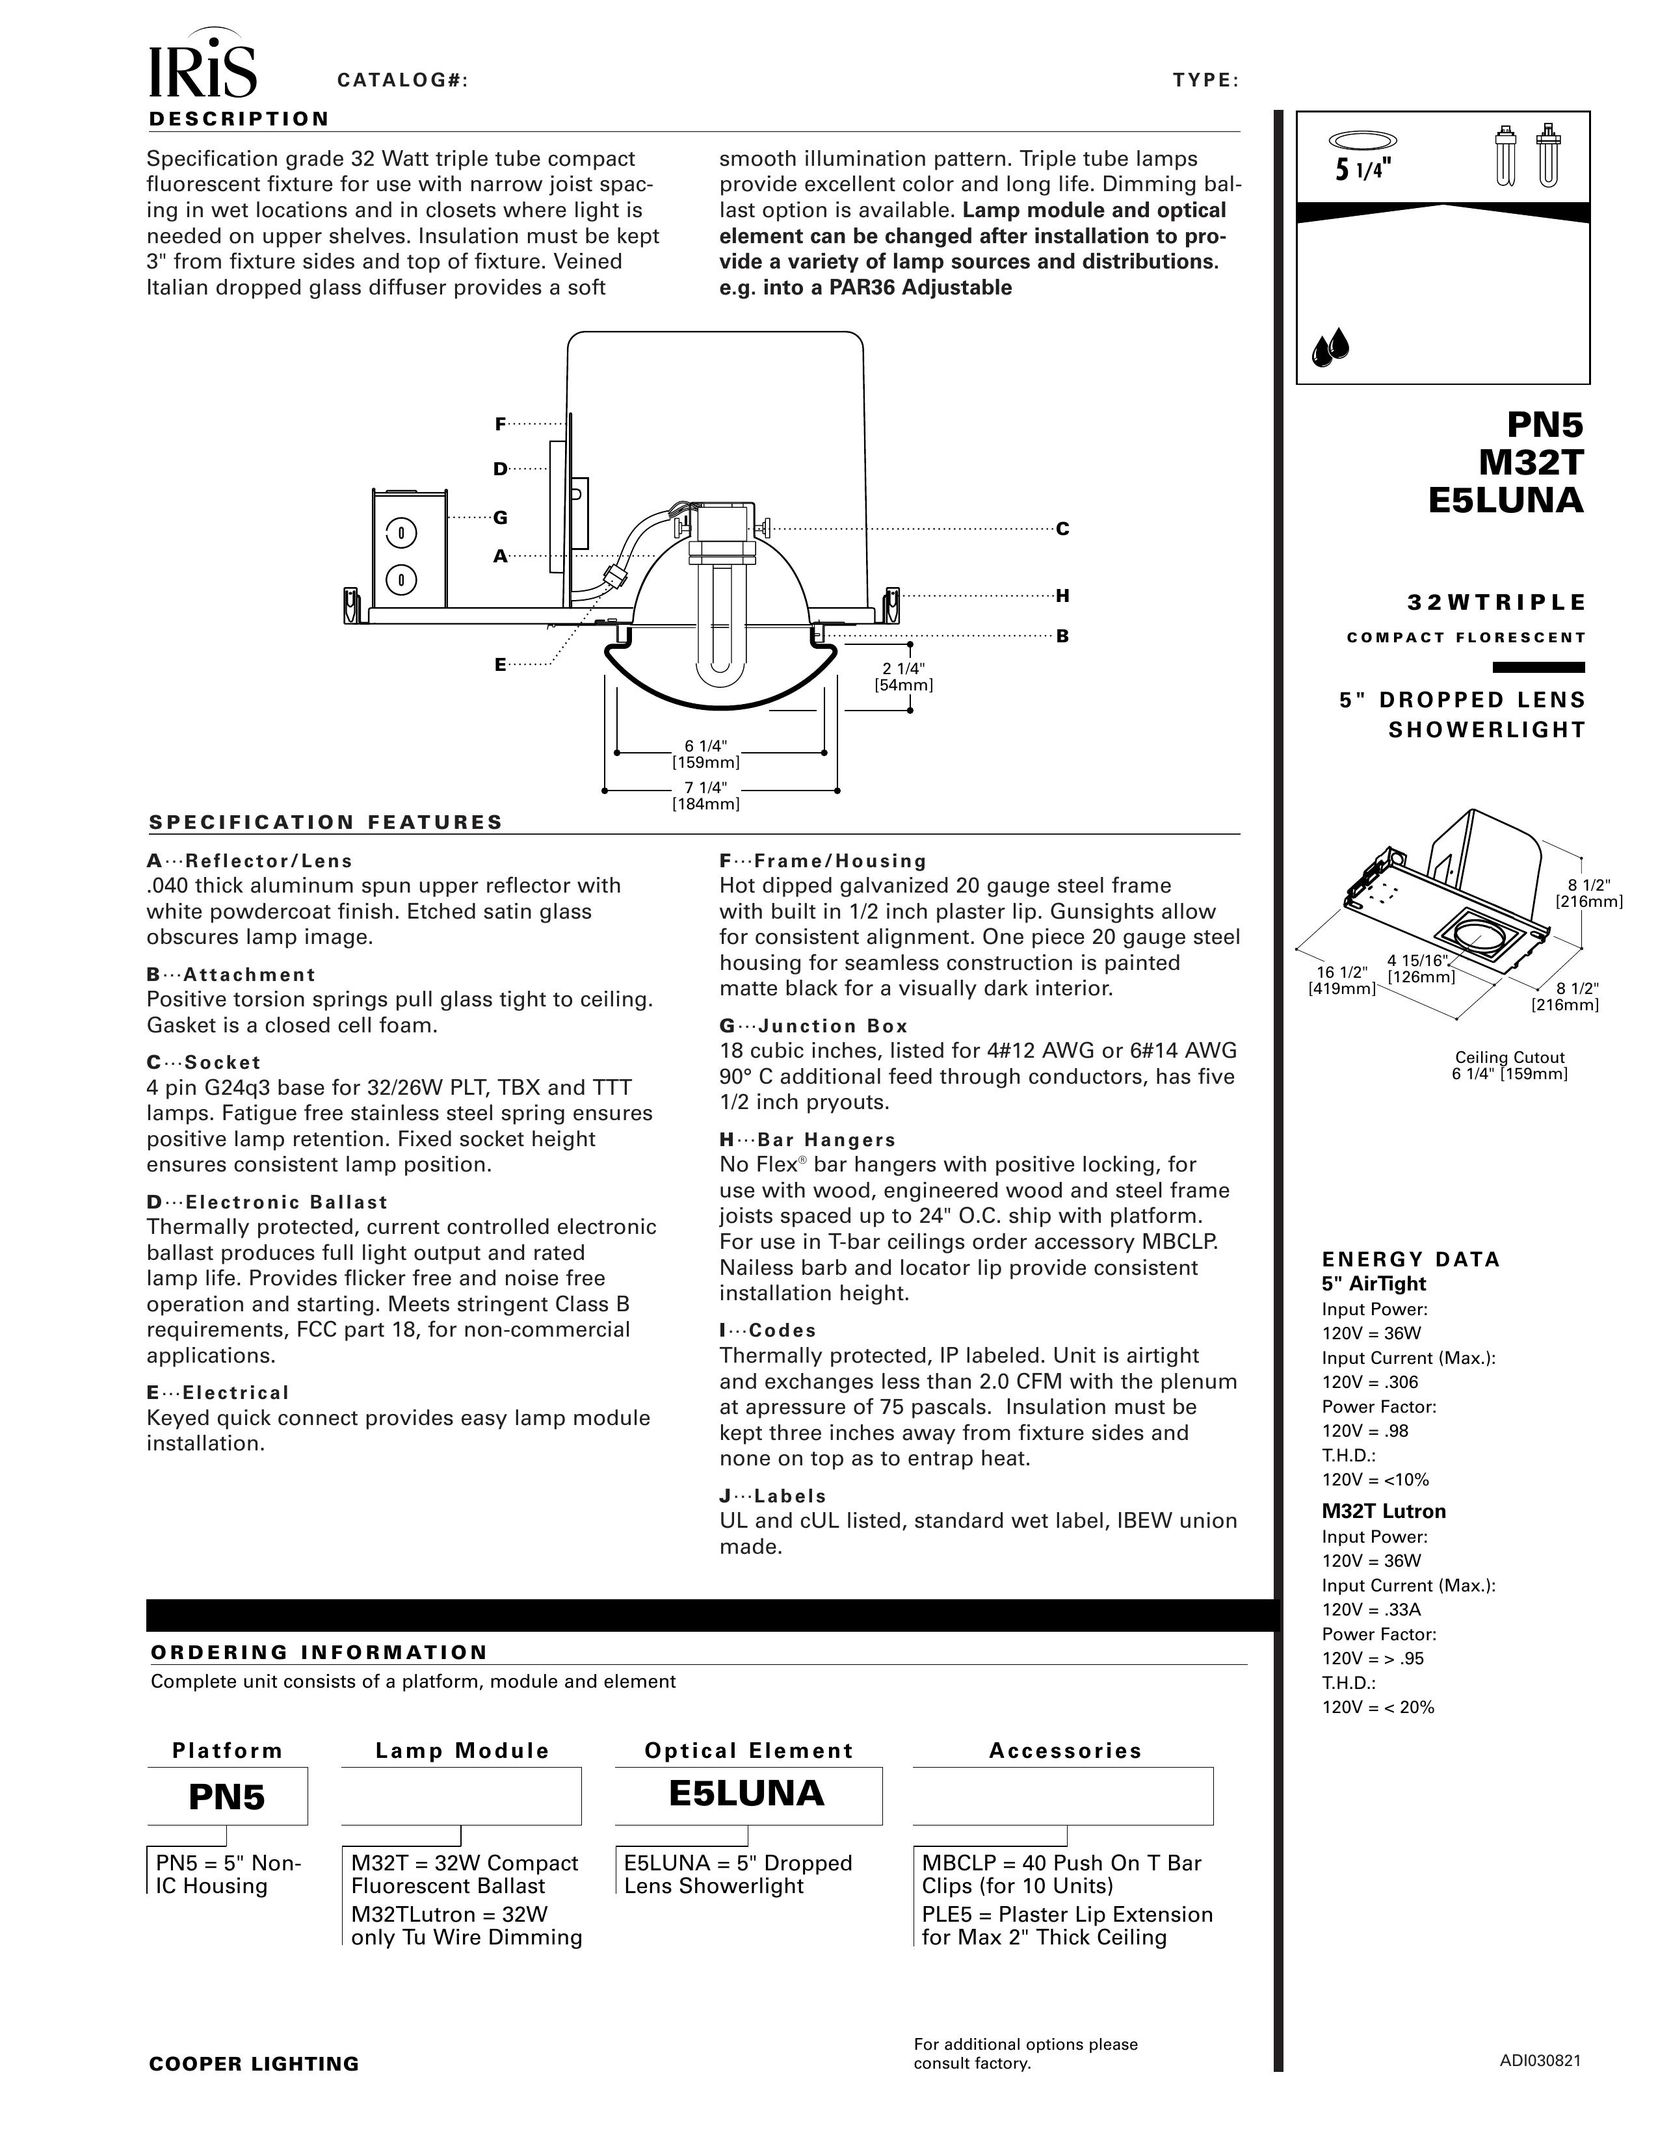 IRIS E5LUNA Indoor Furnishings User Manual